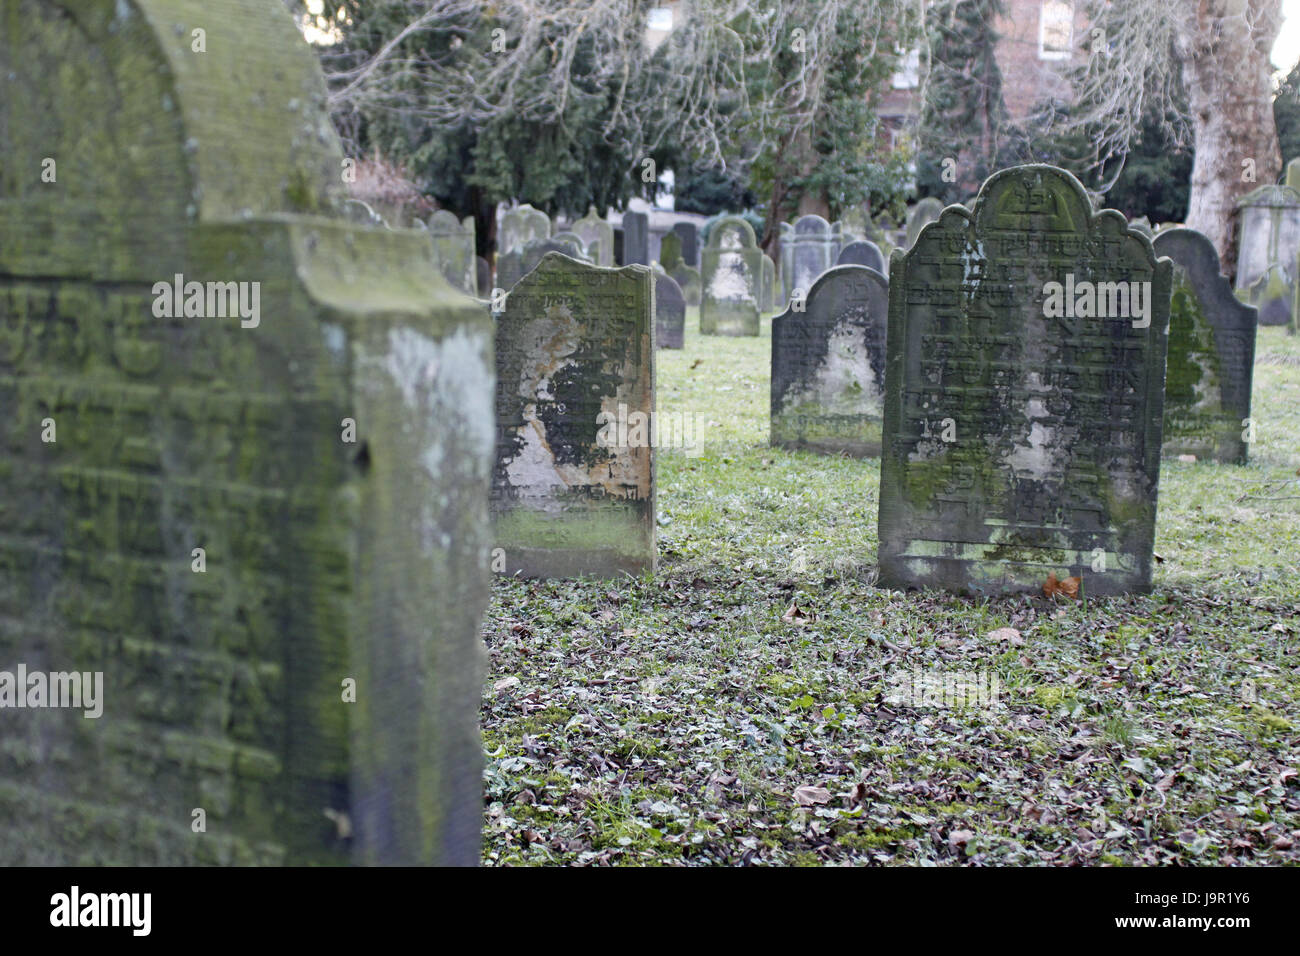 jewish, grave, gravestone, tombstone, jewishness, judaism, graves, tombstones, Stock Photo